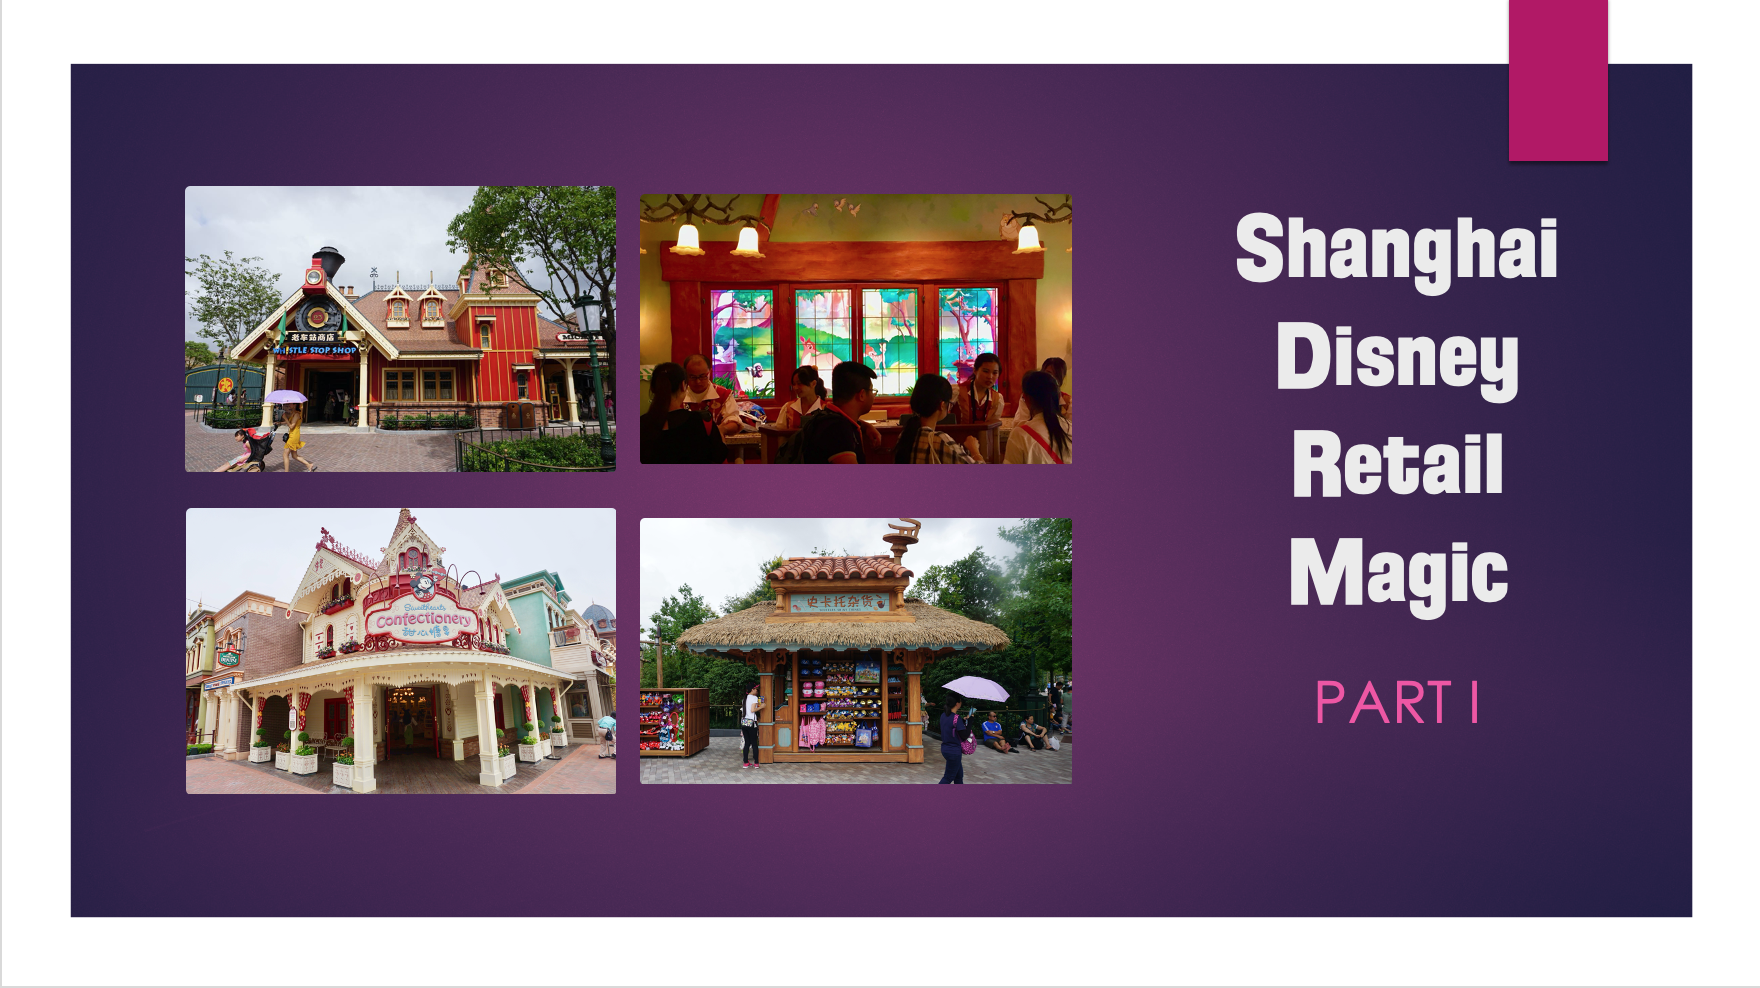 Shanghai Disney Retail Magic: Part I